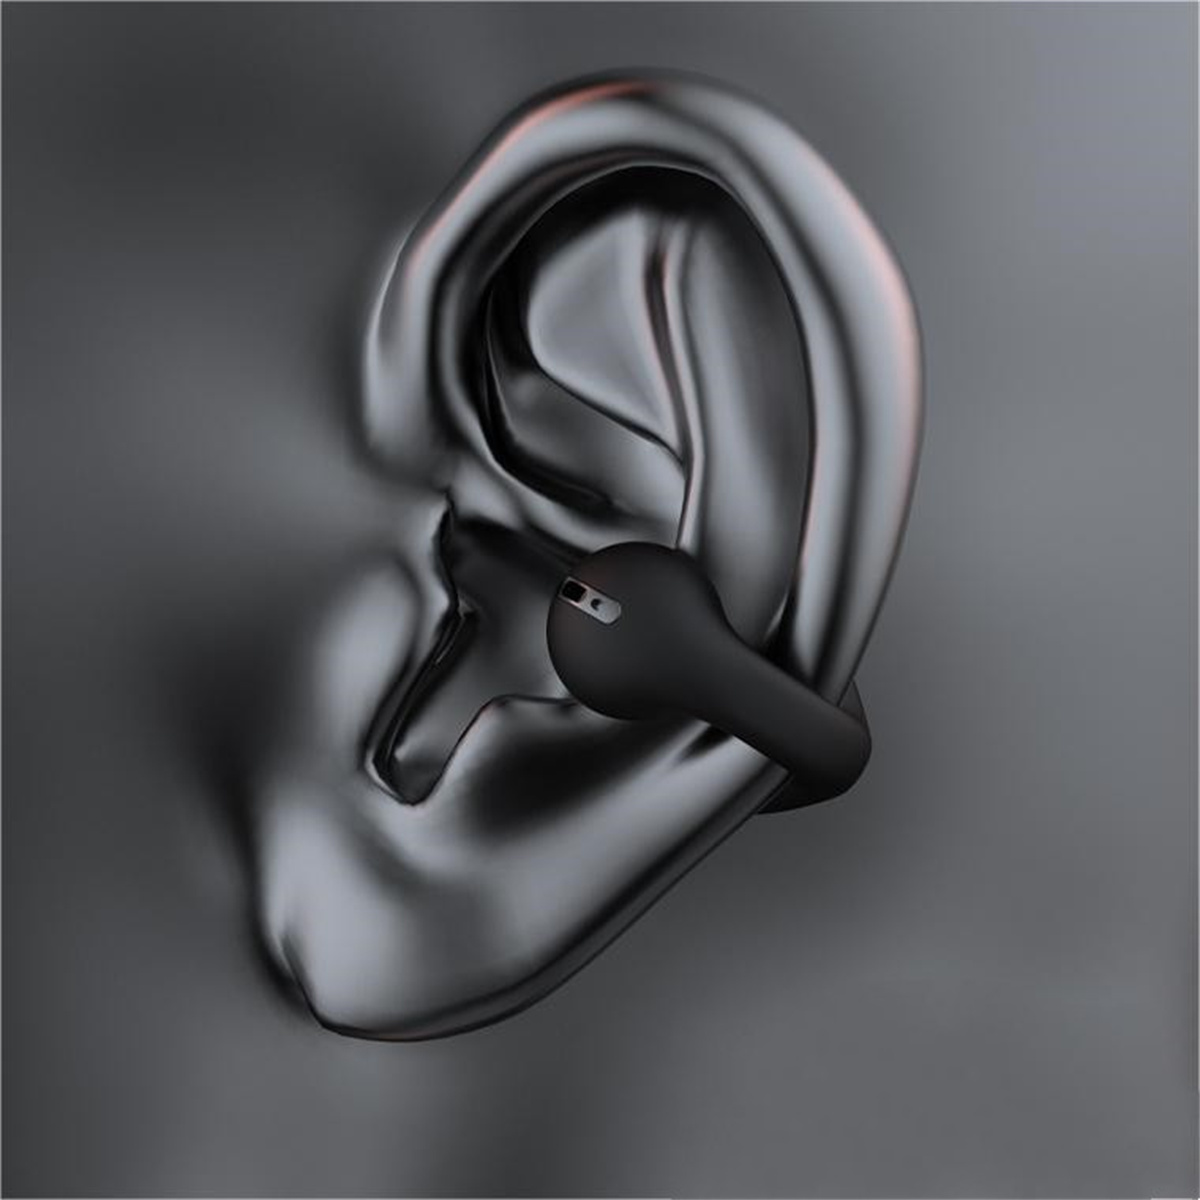 drahtloses Bluetooth SYNTEK Gelb Gelbes Headset On-ear Bluetooth Kopfhörer Bluetooth Knochenleitung, Headset